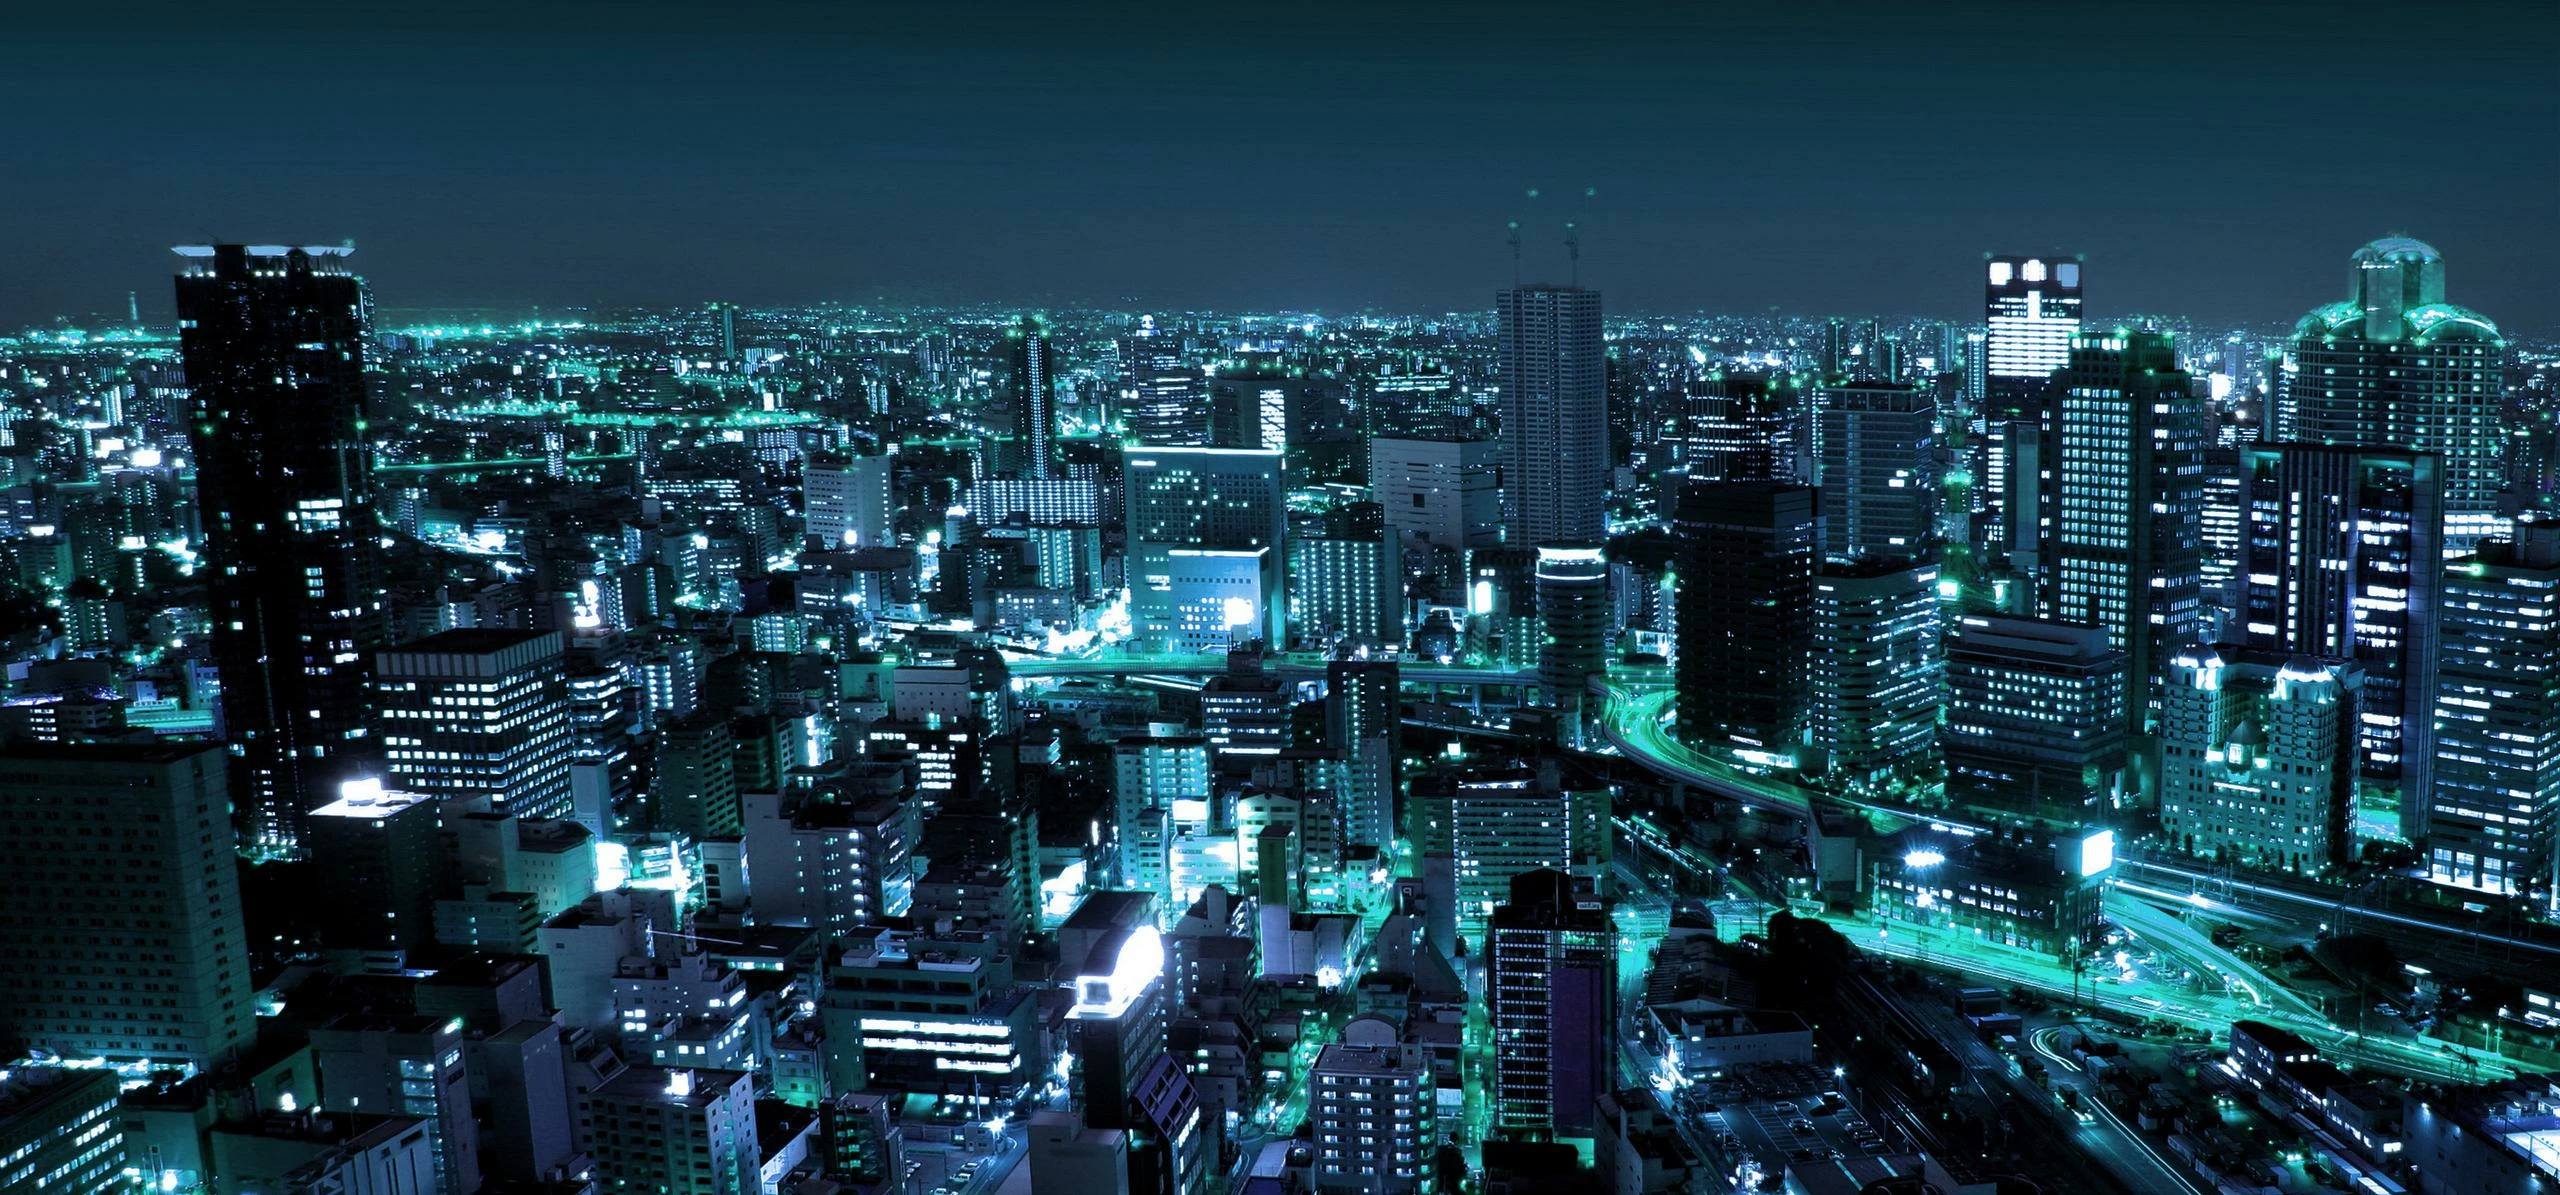 Urban City by Night